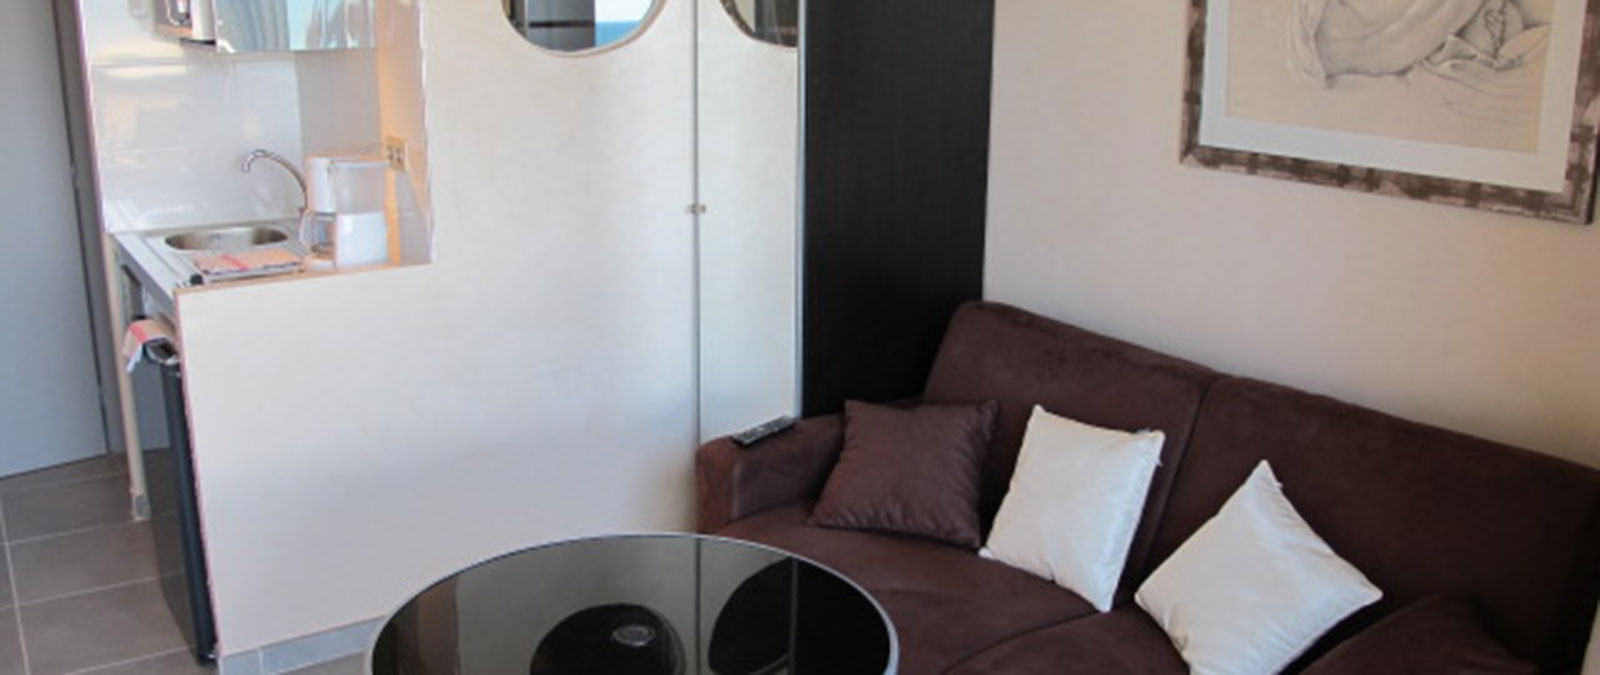 Lounge Classic naturist studio flat for rent